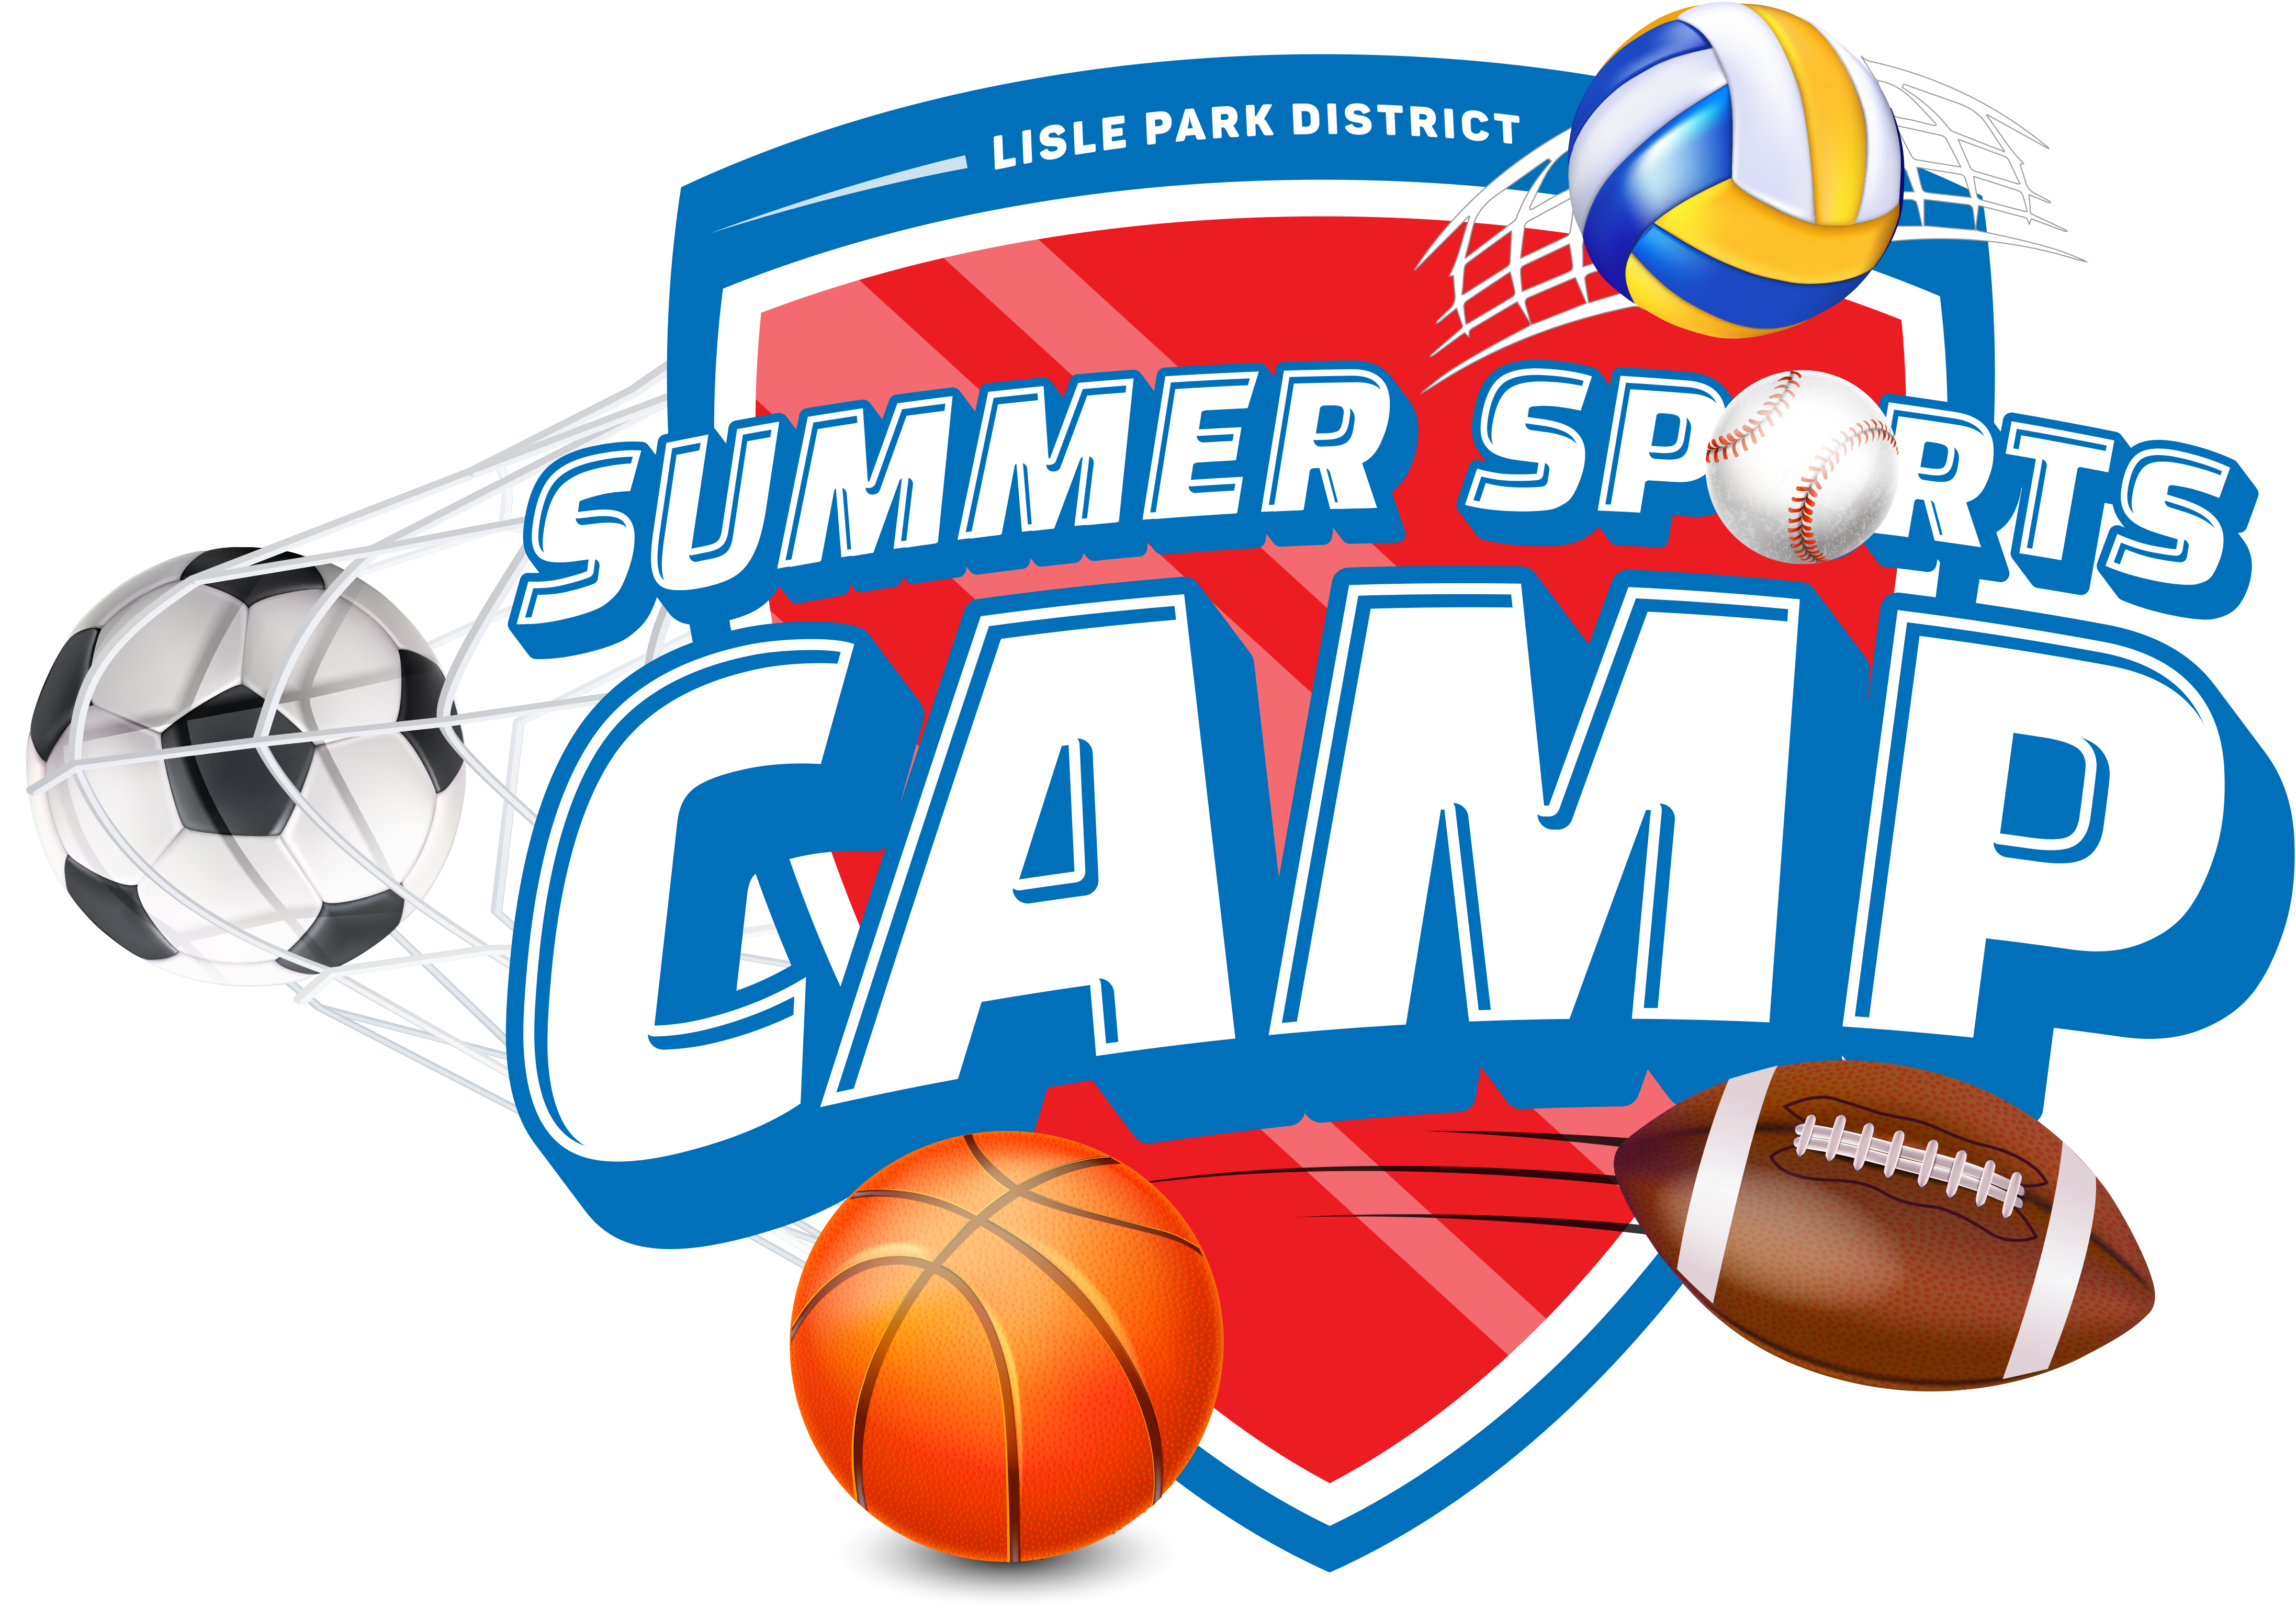 Lisle Park District Summer Sports Camp Logo